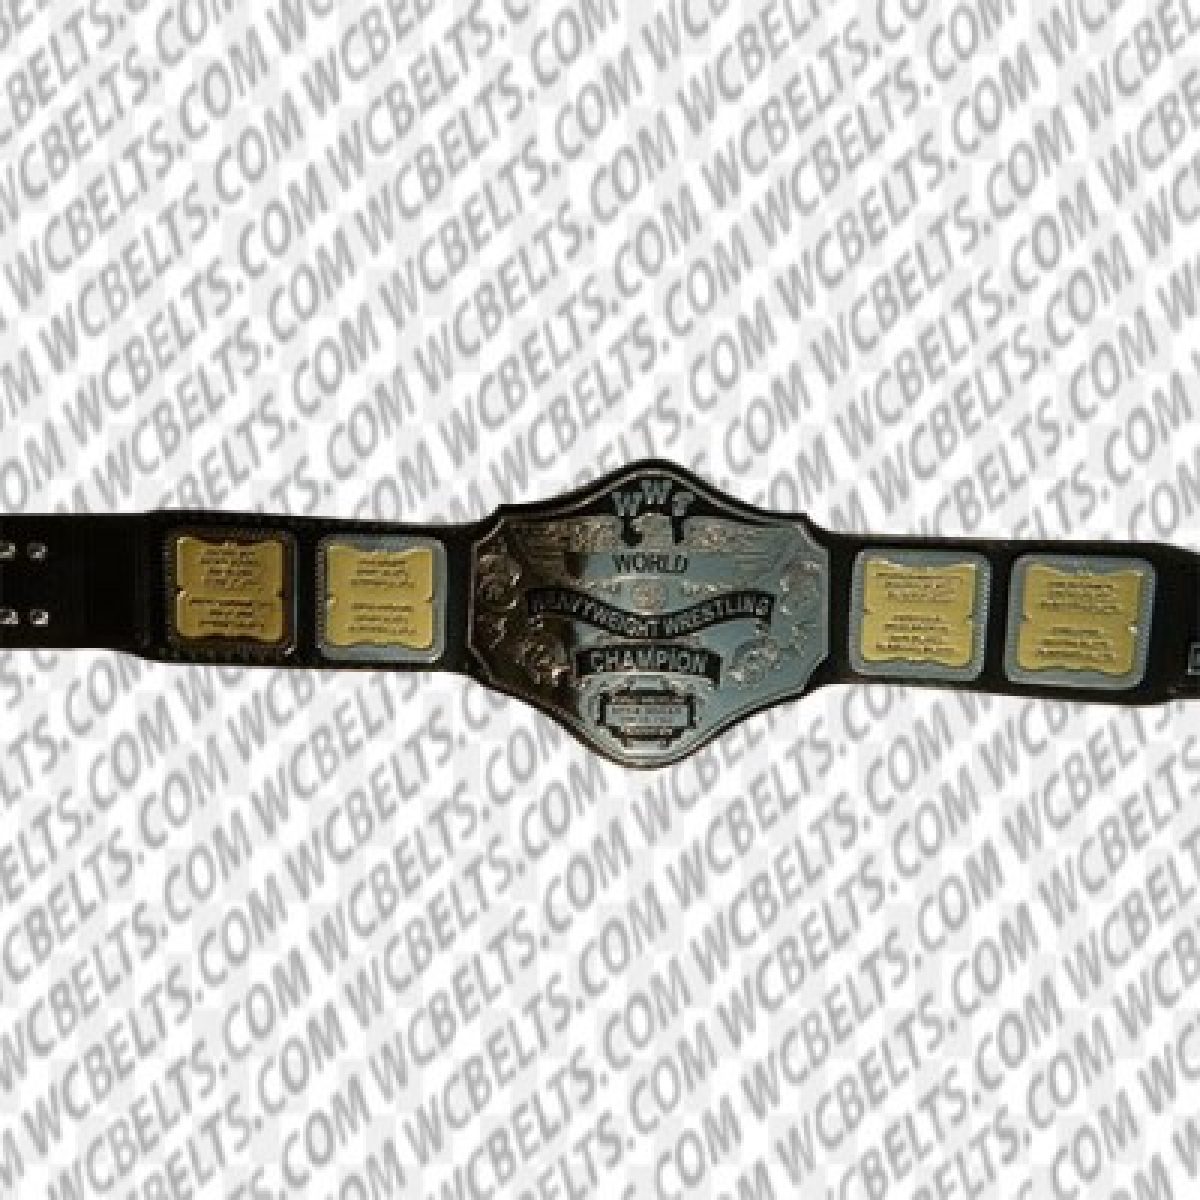 WWE Championship 1986 Retro Replica Title Belt